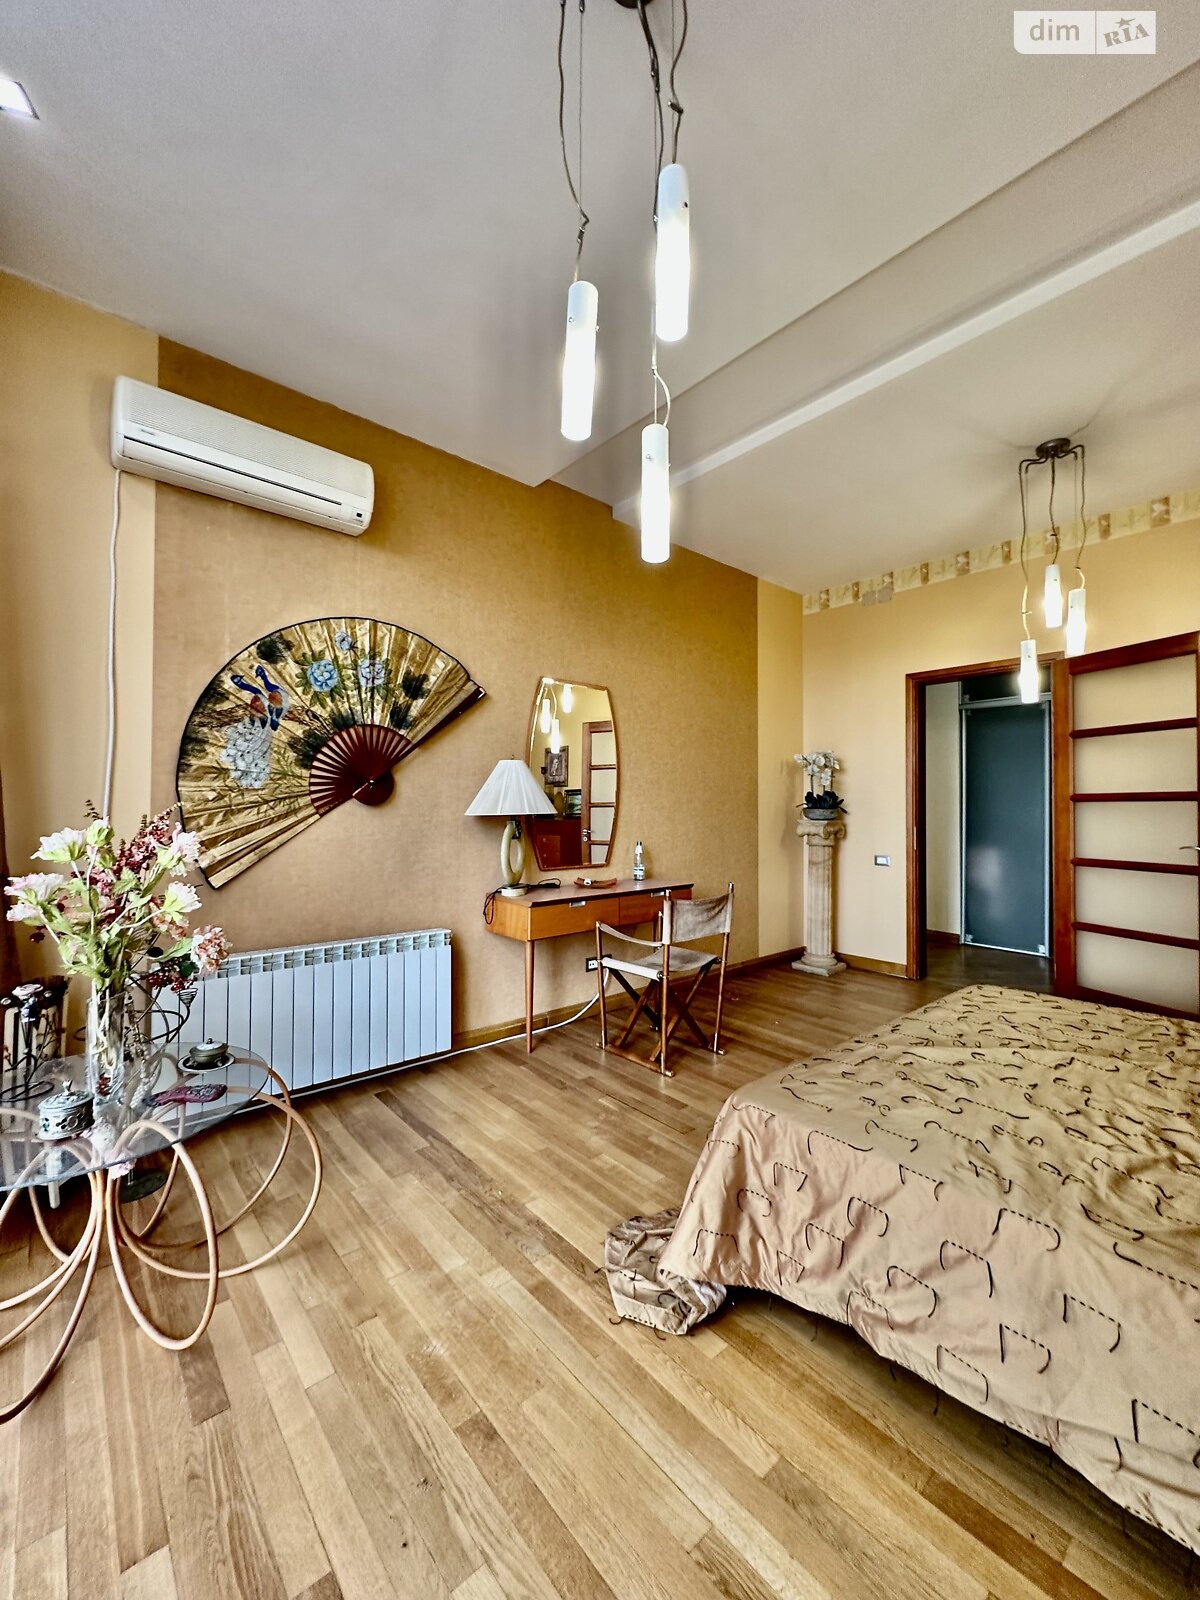 Продажа четырехкомнатной квартиры в Одессе, на ул. Юрия Олеши, район Центр фото 1